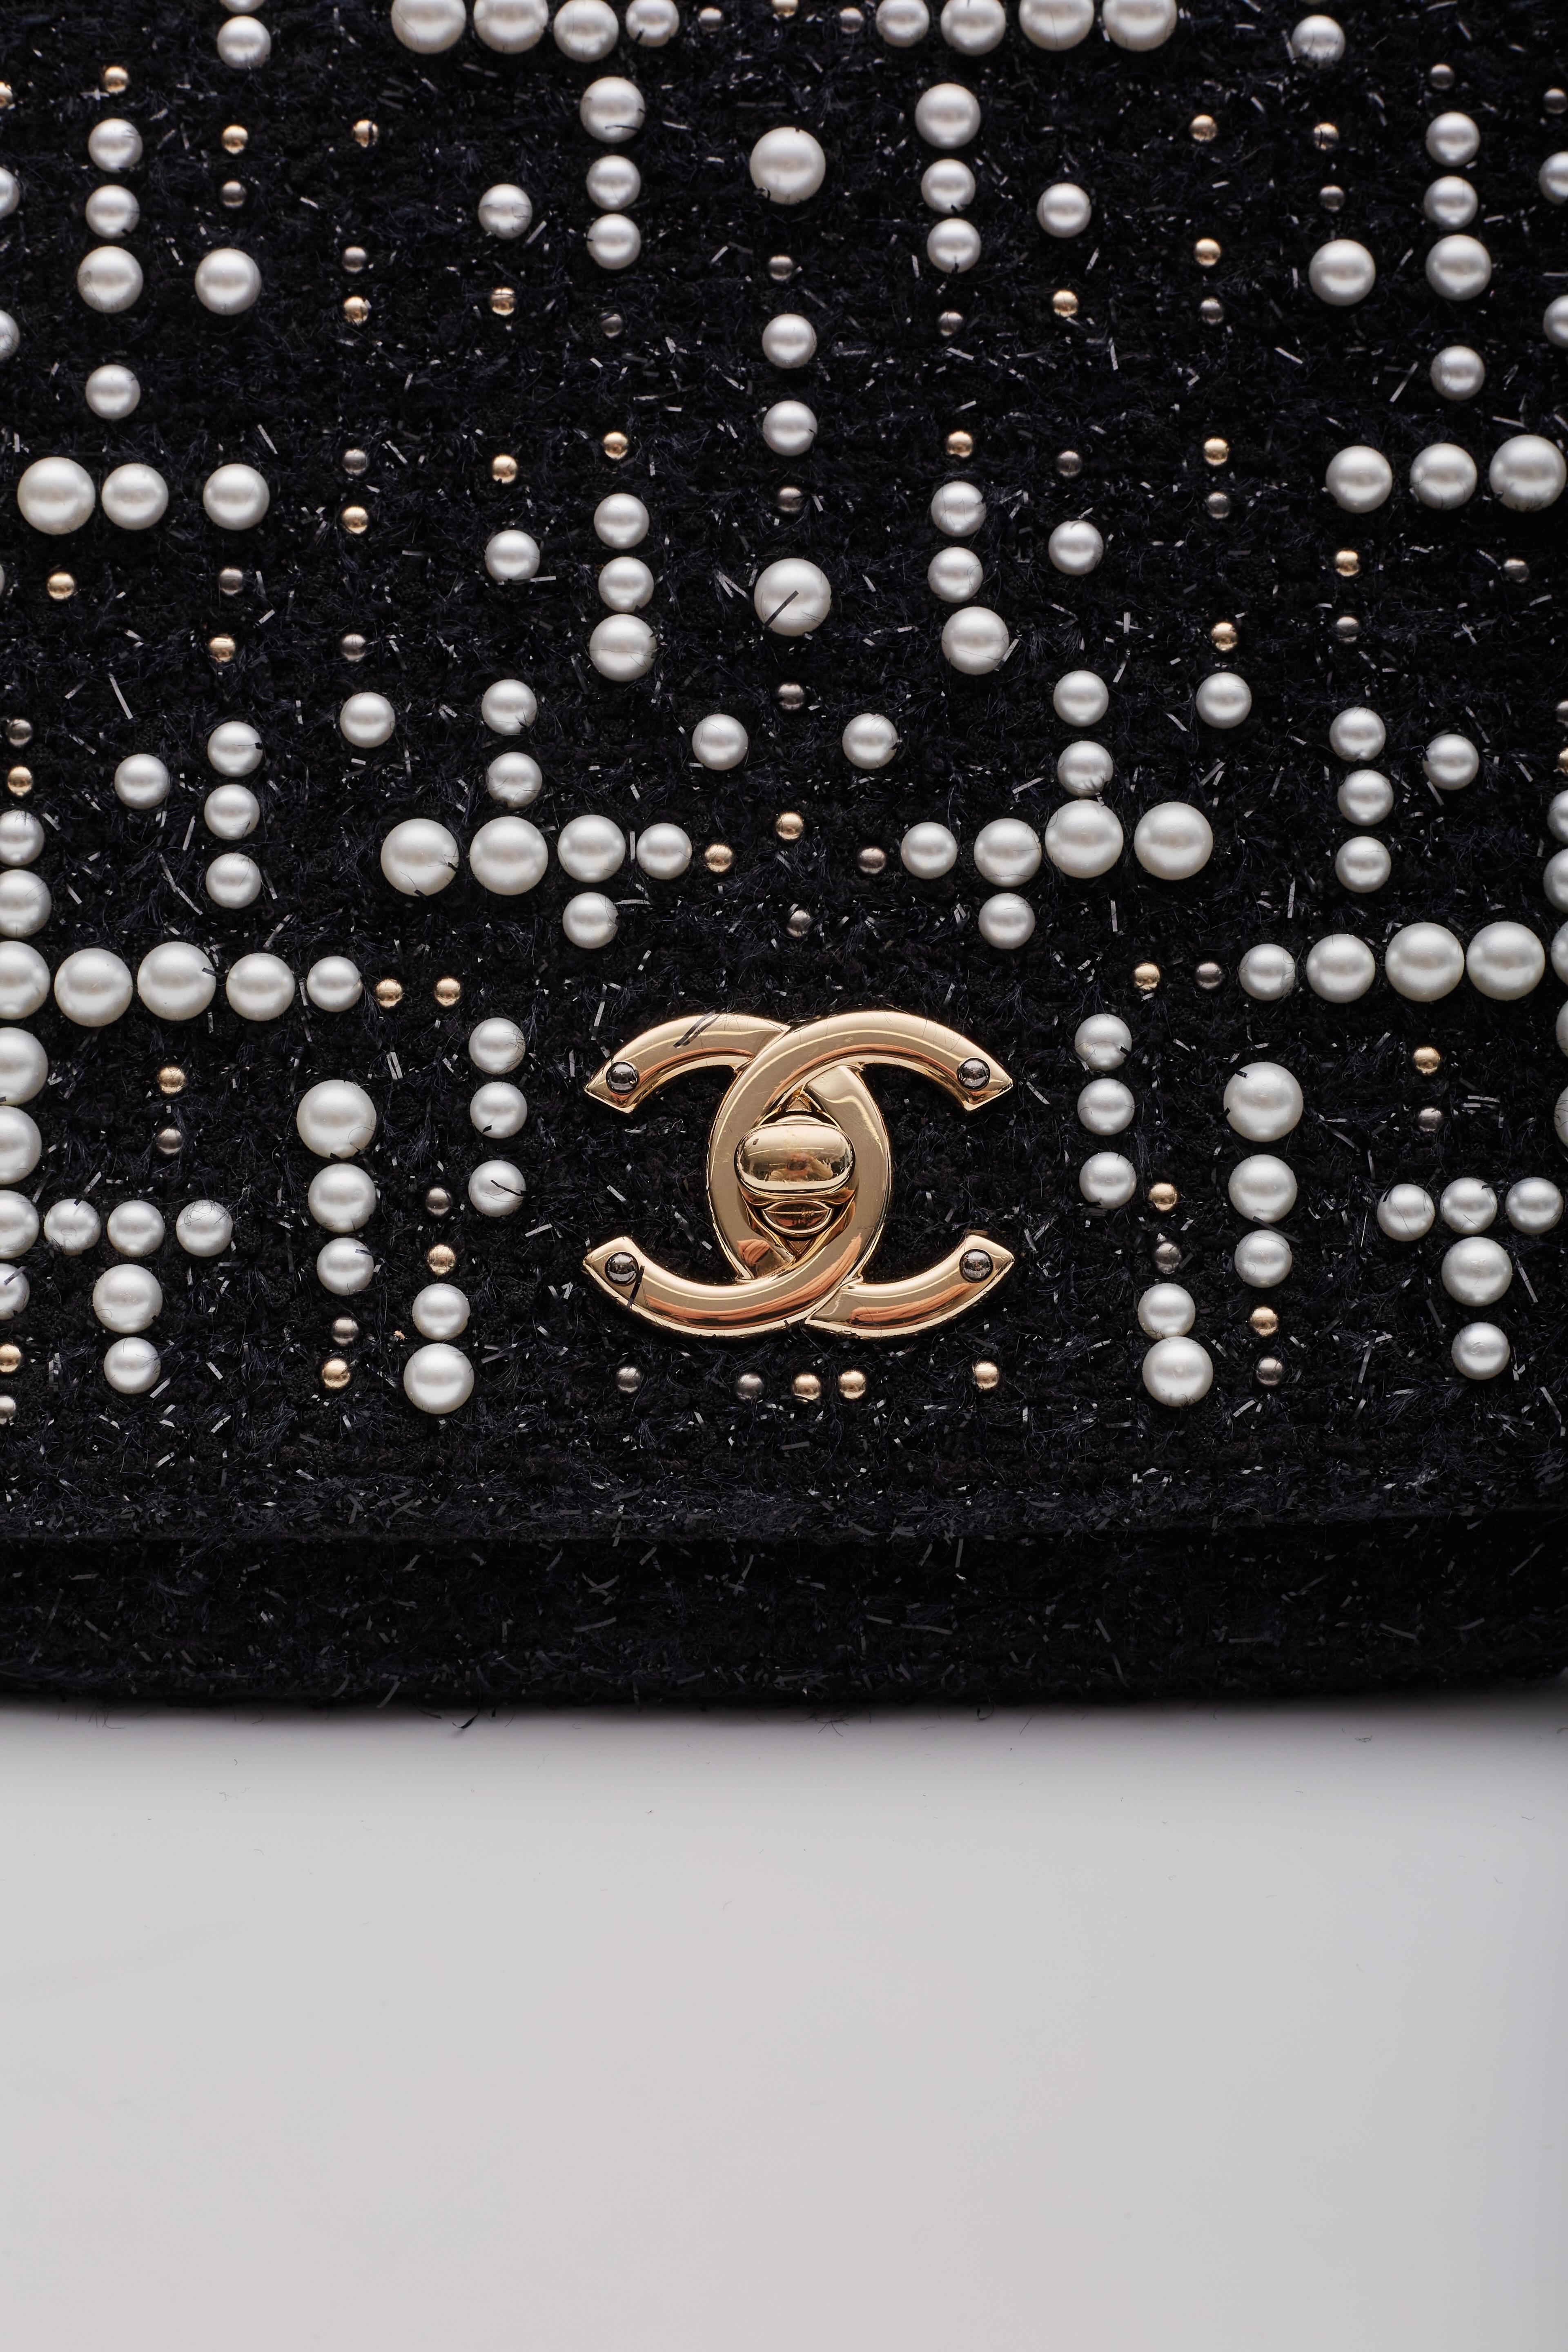 Chanel Paris Cosmopolite Pearl Fantasy Tweed Flap Clutch Bag For Sale 6